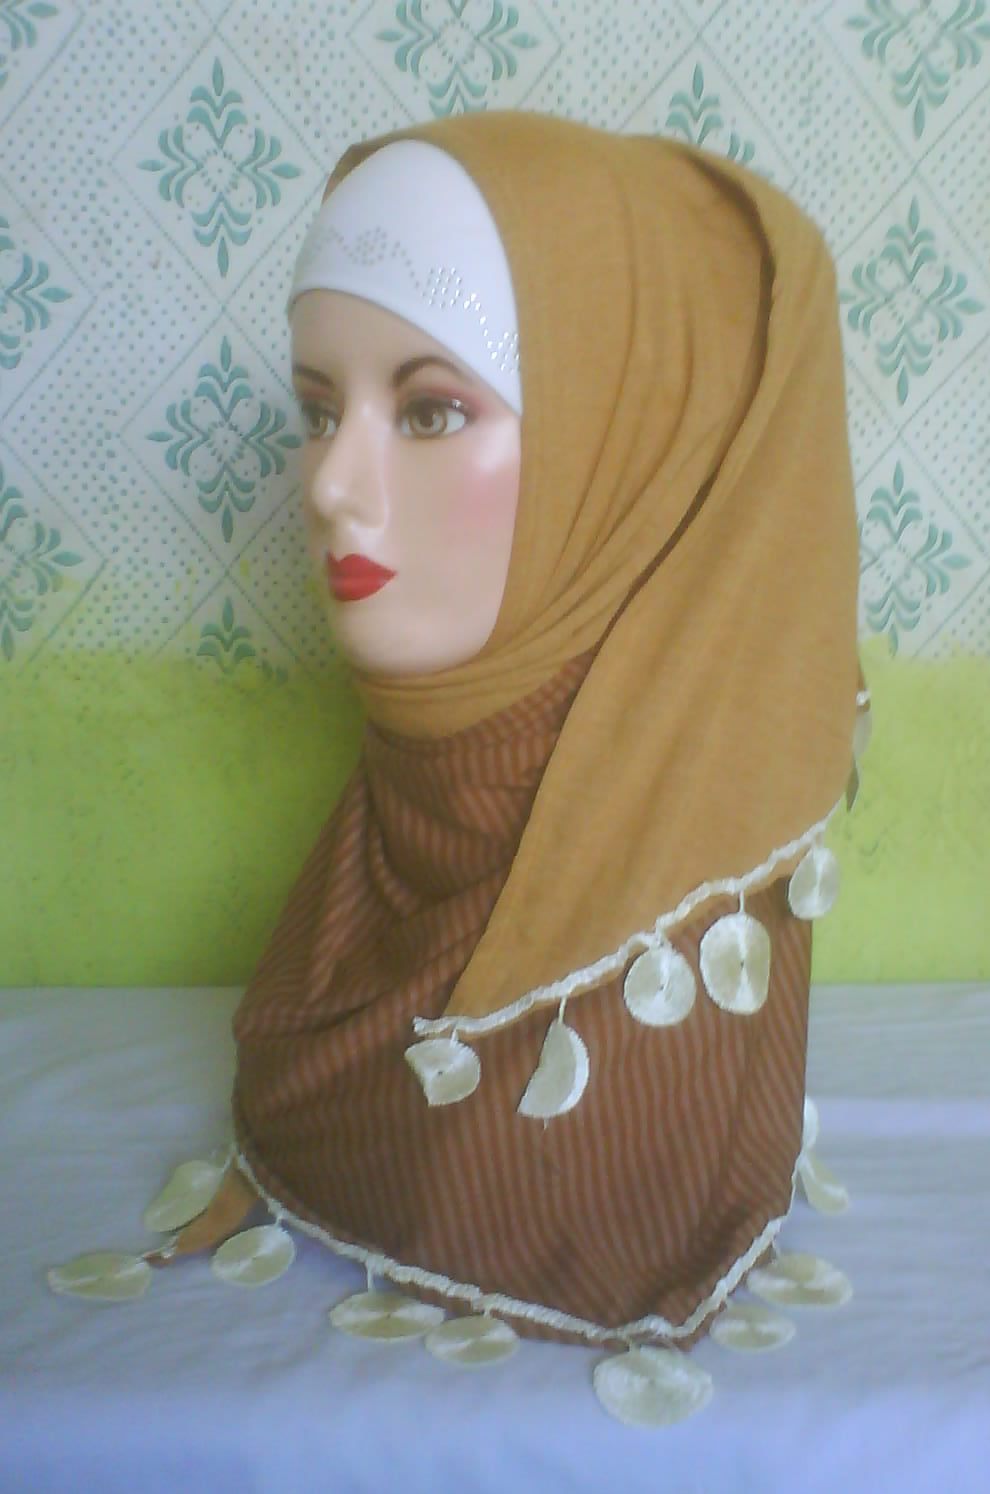 Grosir Jilbab Murah, Jilbab Cantik, Grosir Kerudung Murah 